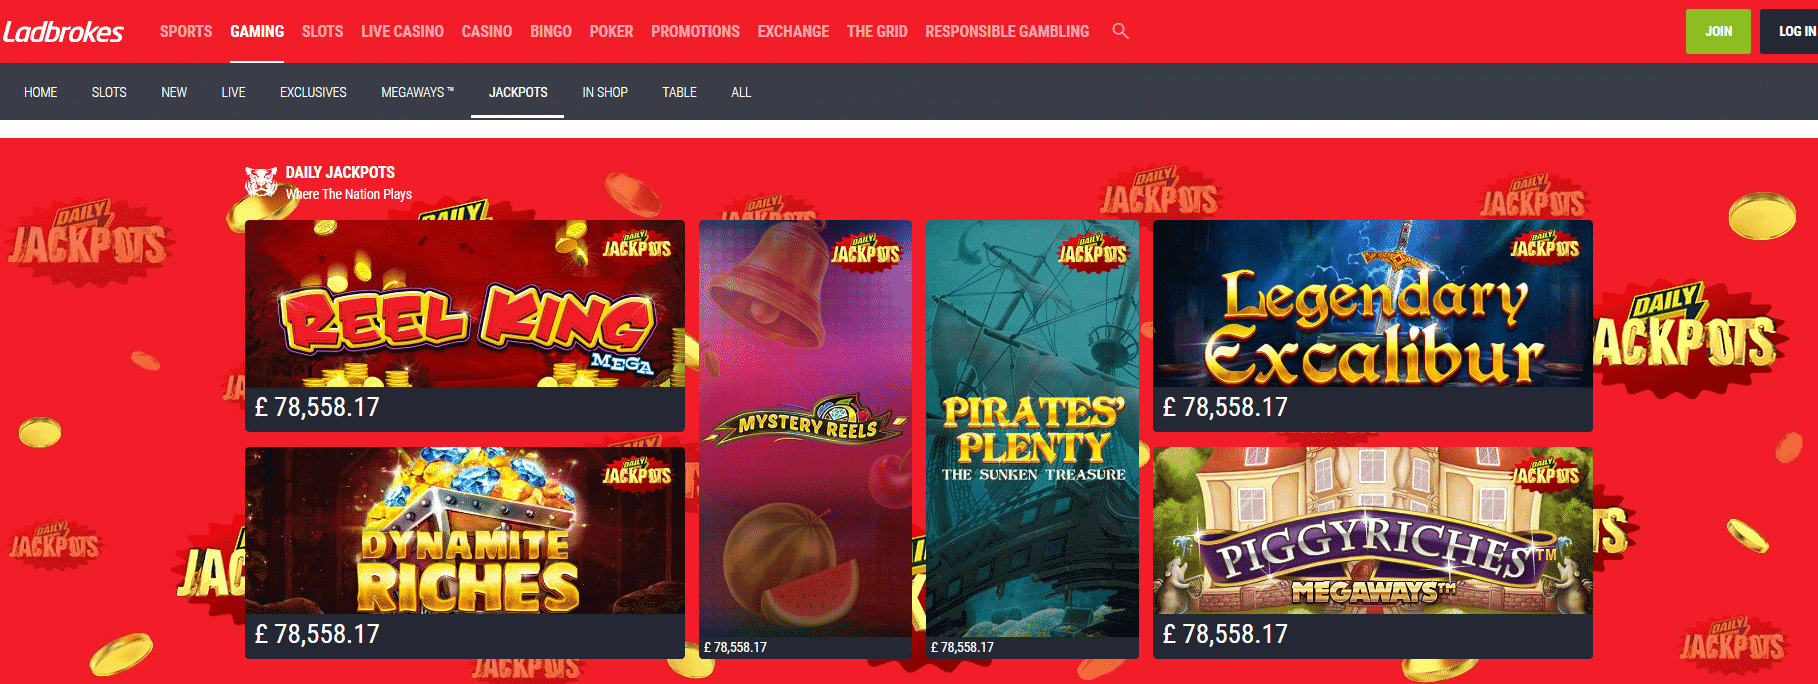 Ladbrokes Online Casino review - Jackpots